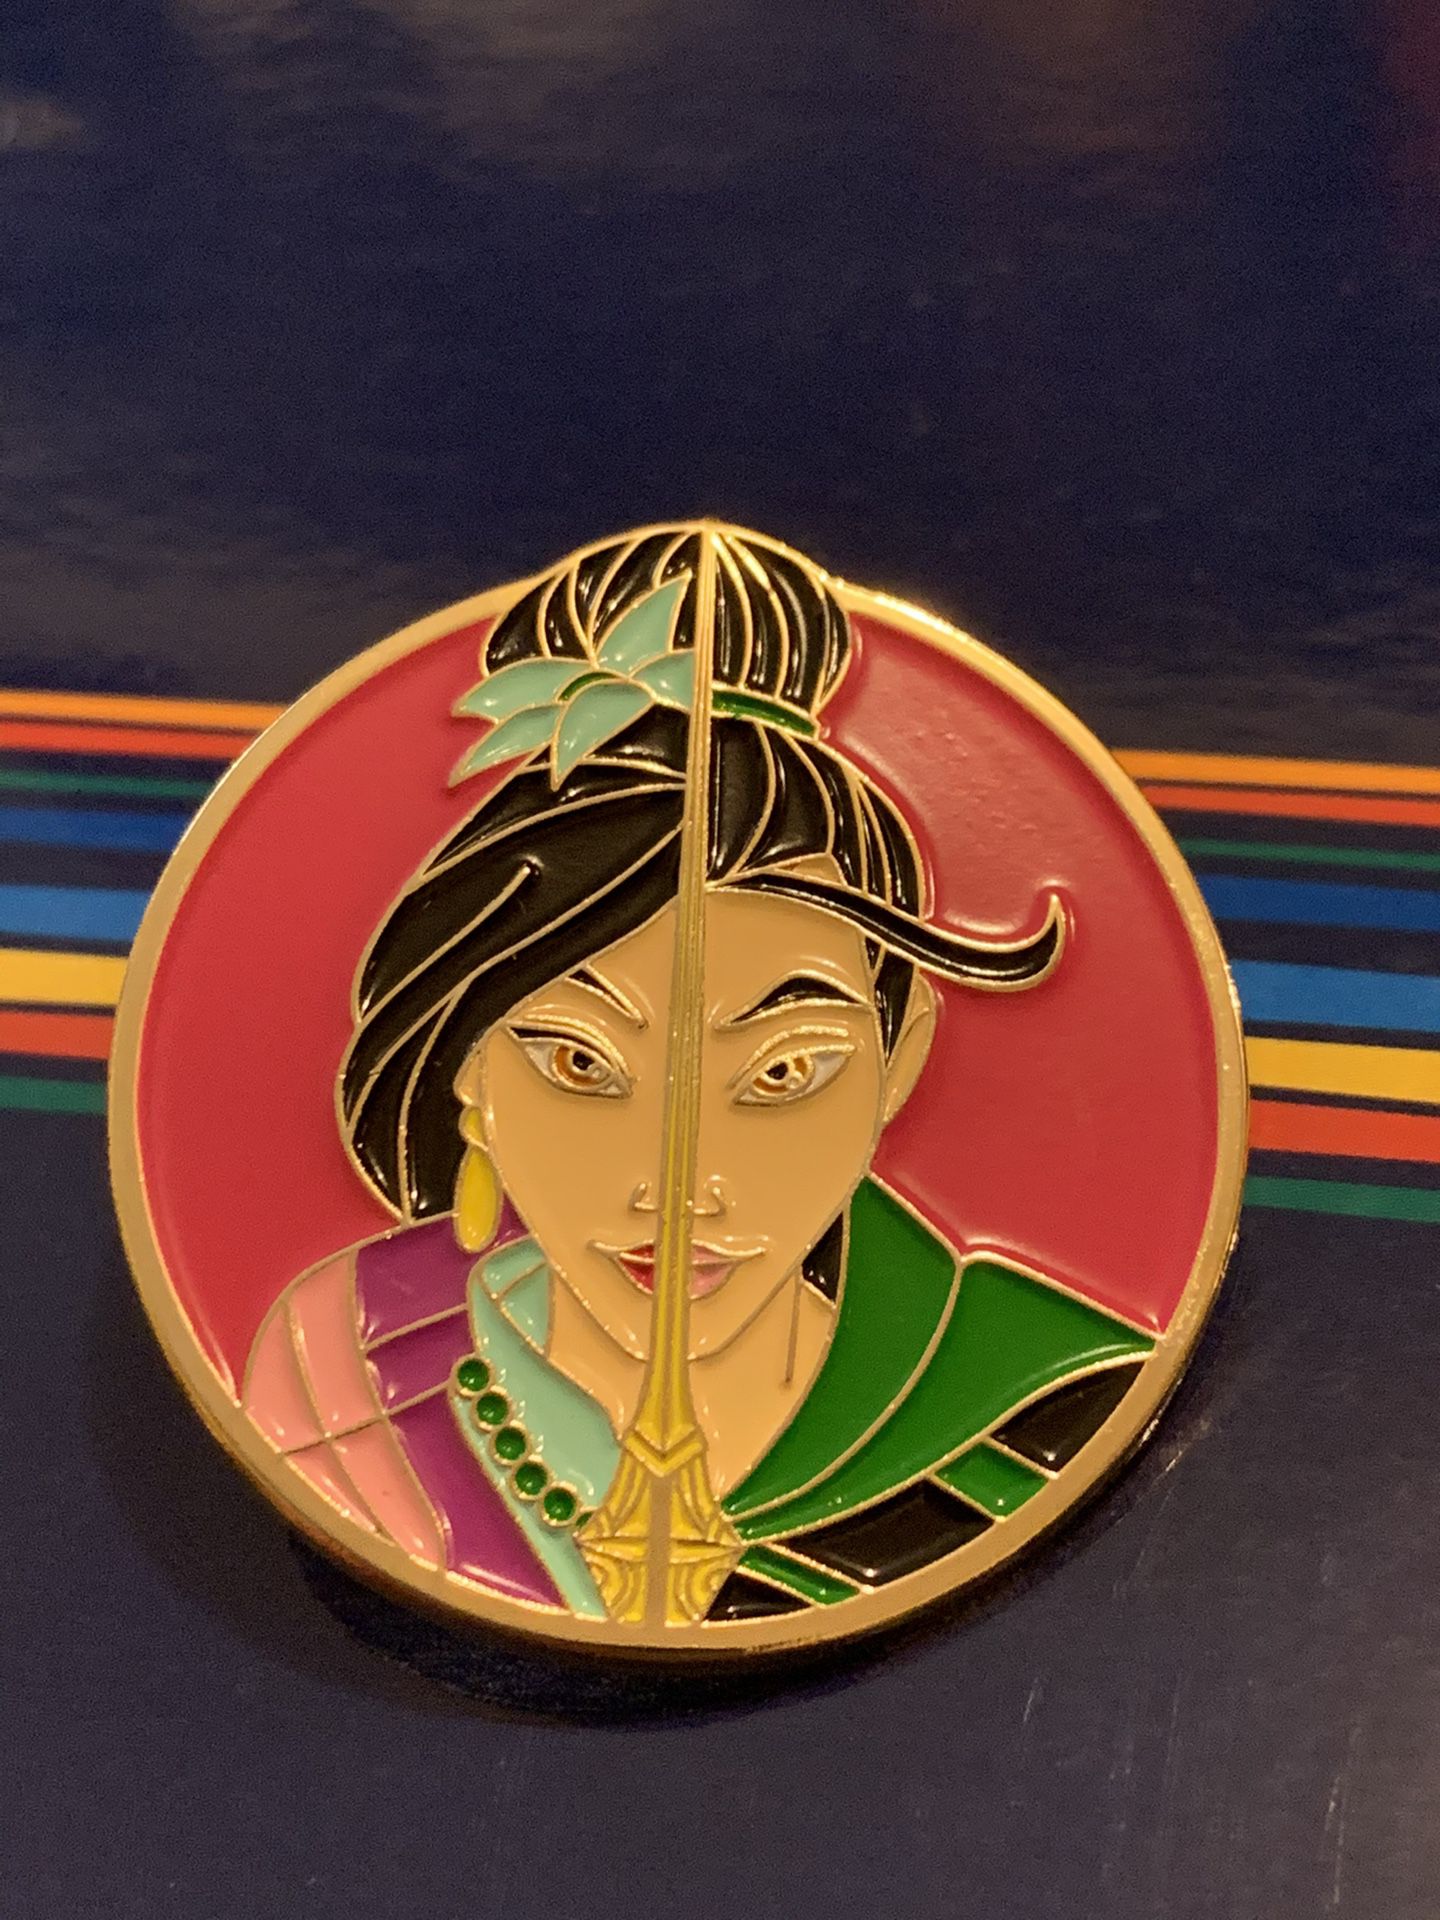 Disneys Mulan double face pin hot topic pin